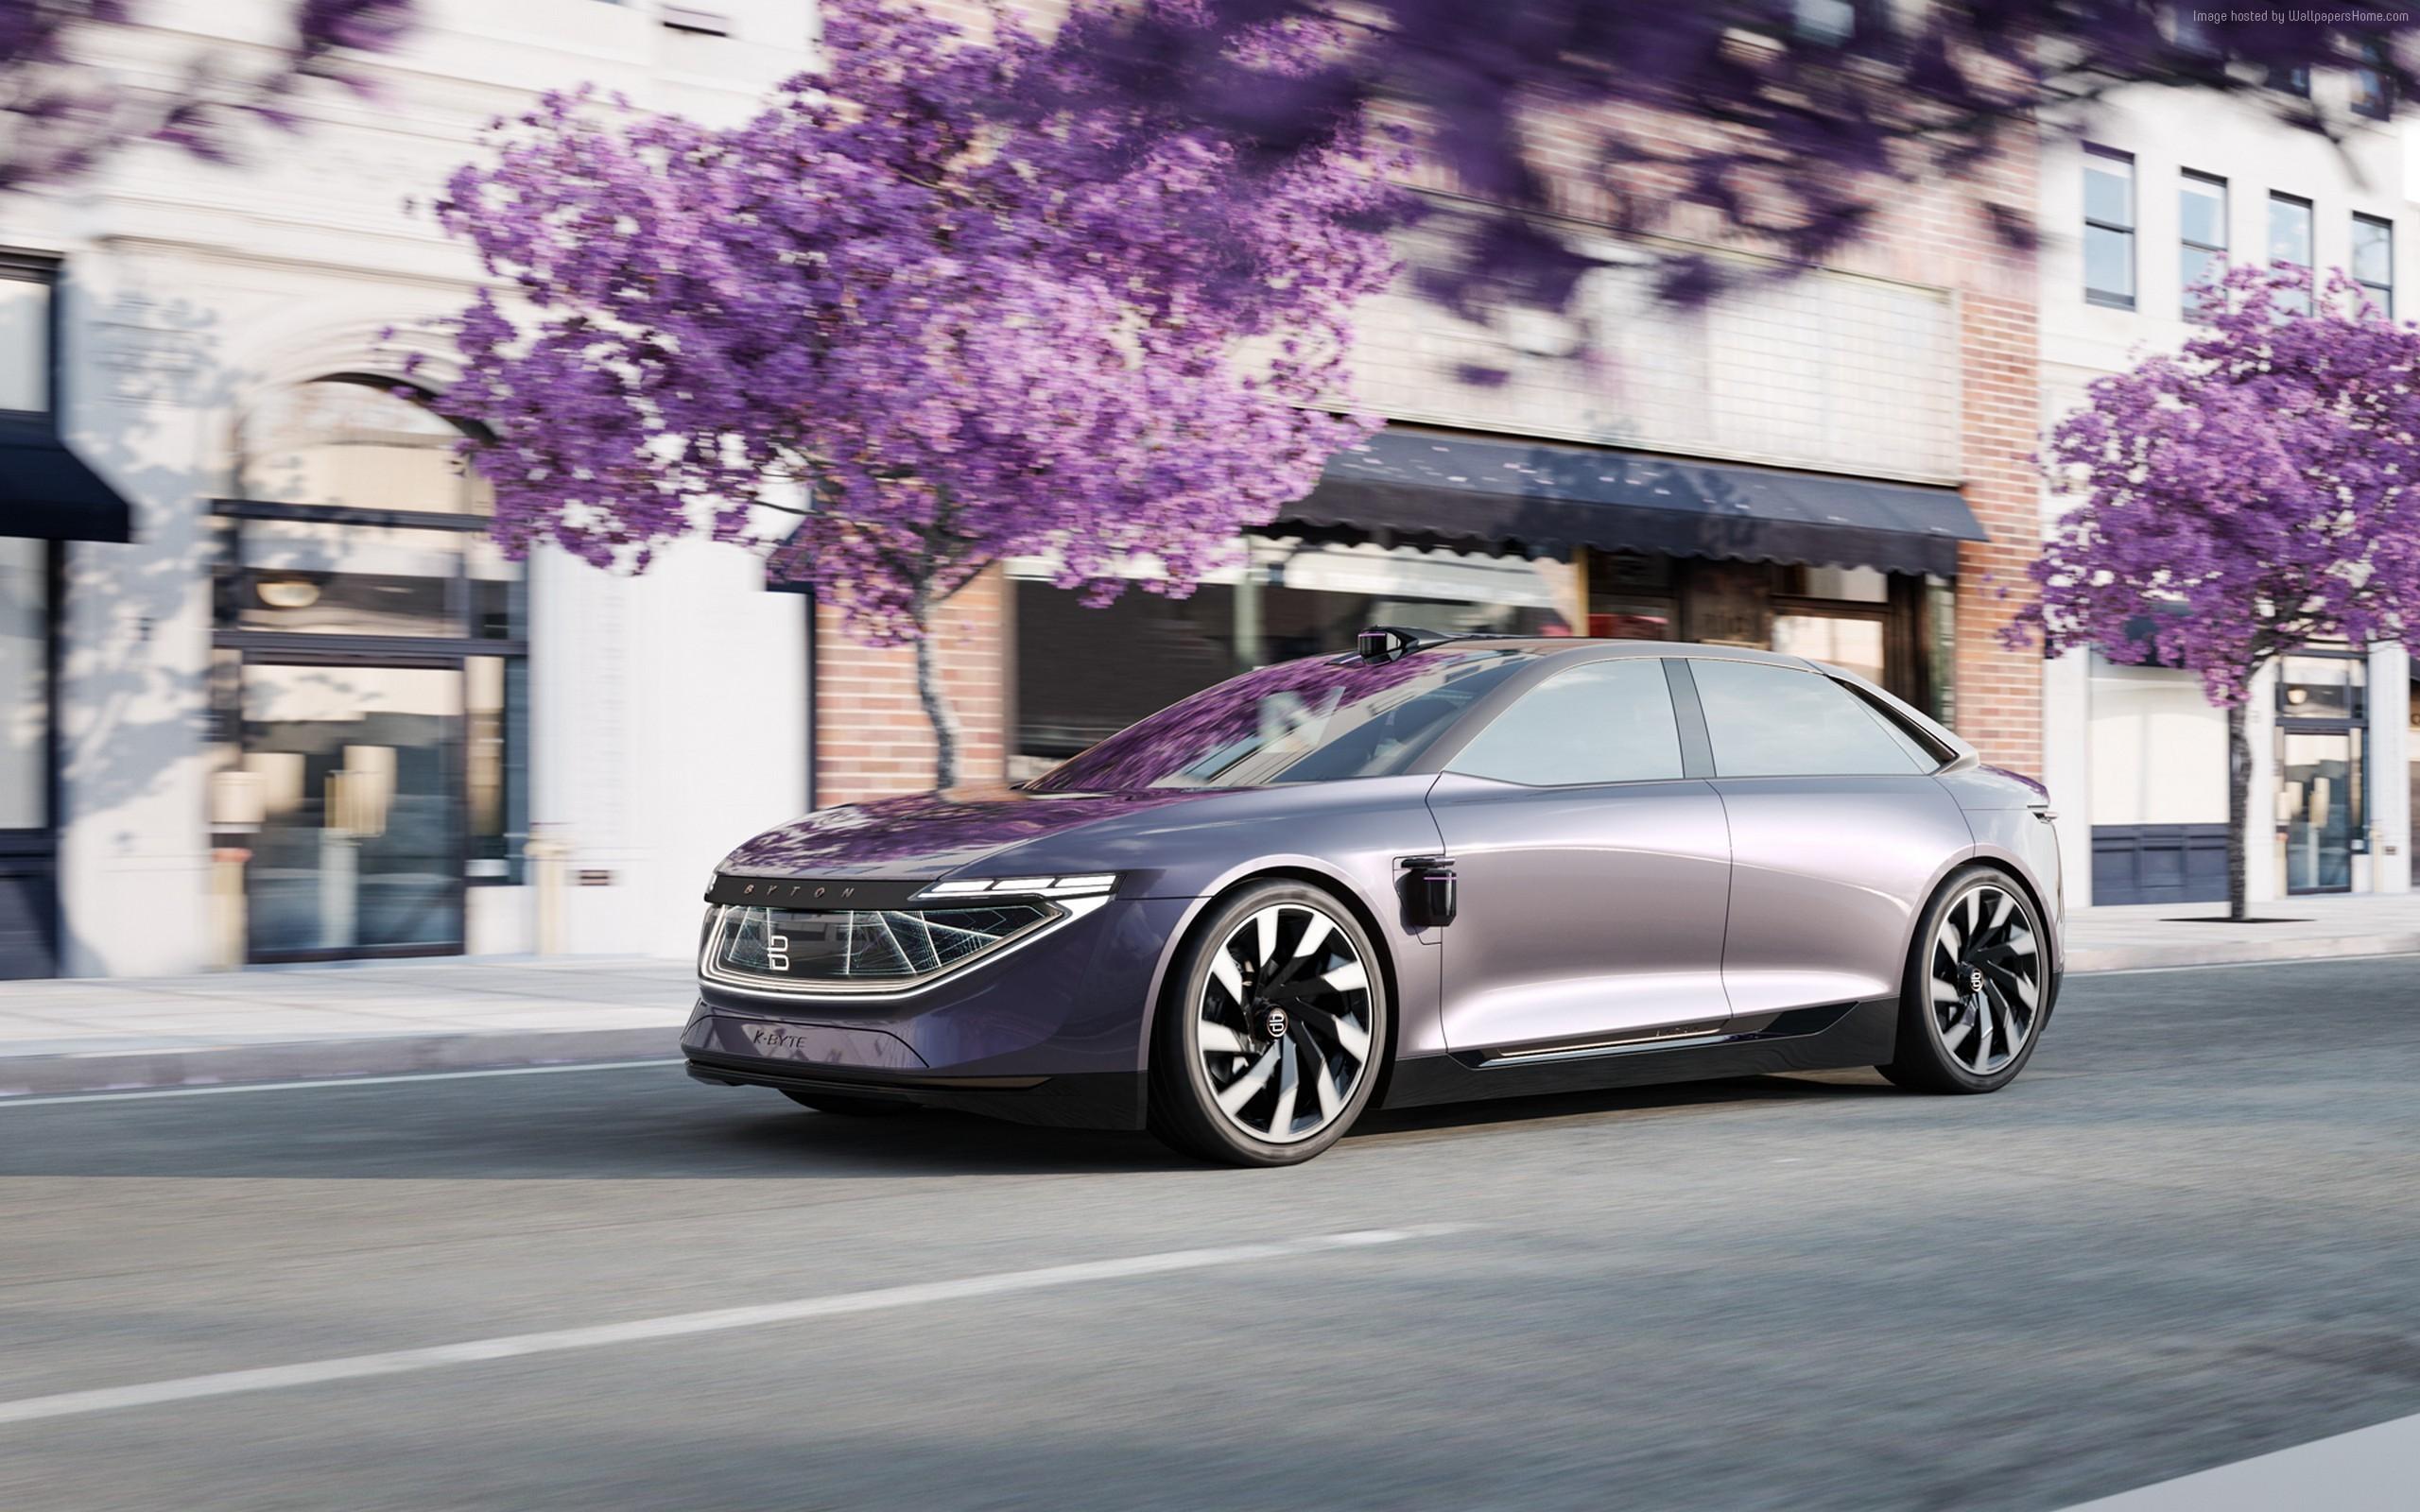 Byton K Byte Concept, Electric Car, 2018 Cars Wallpaper